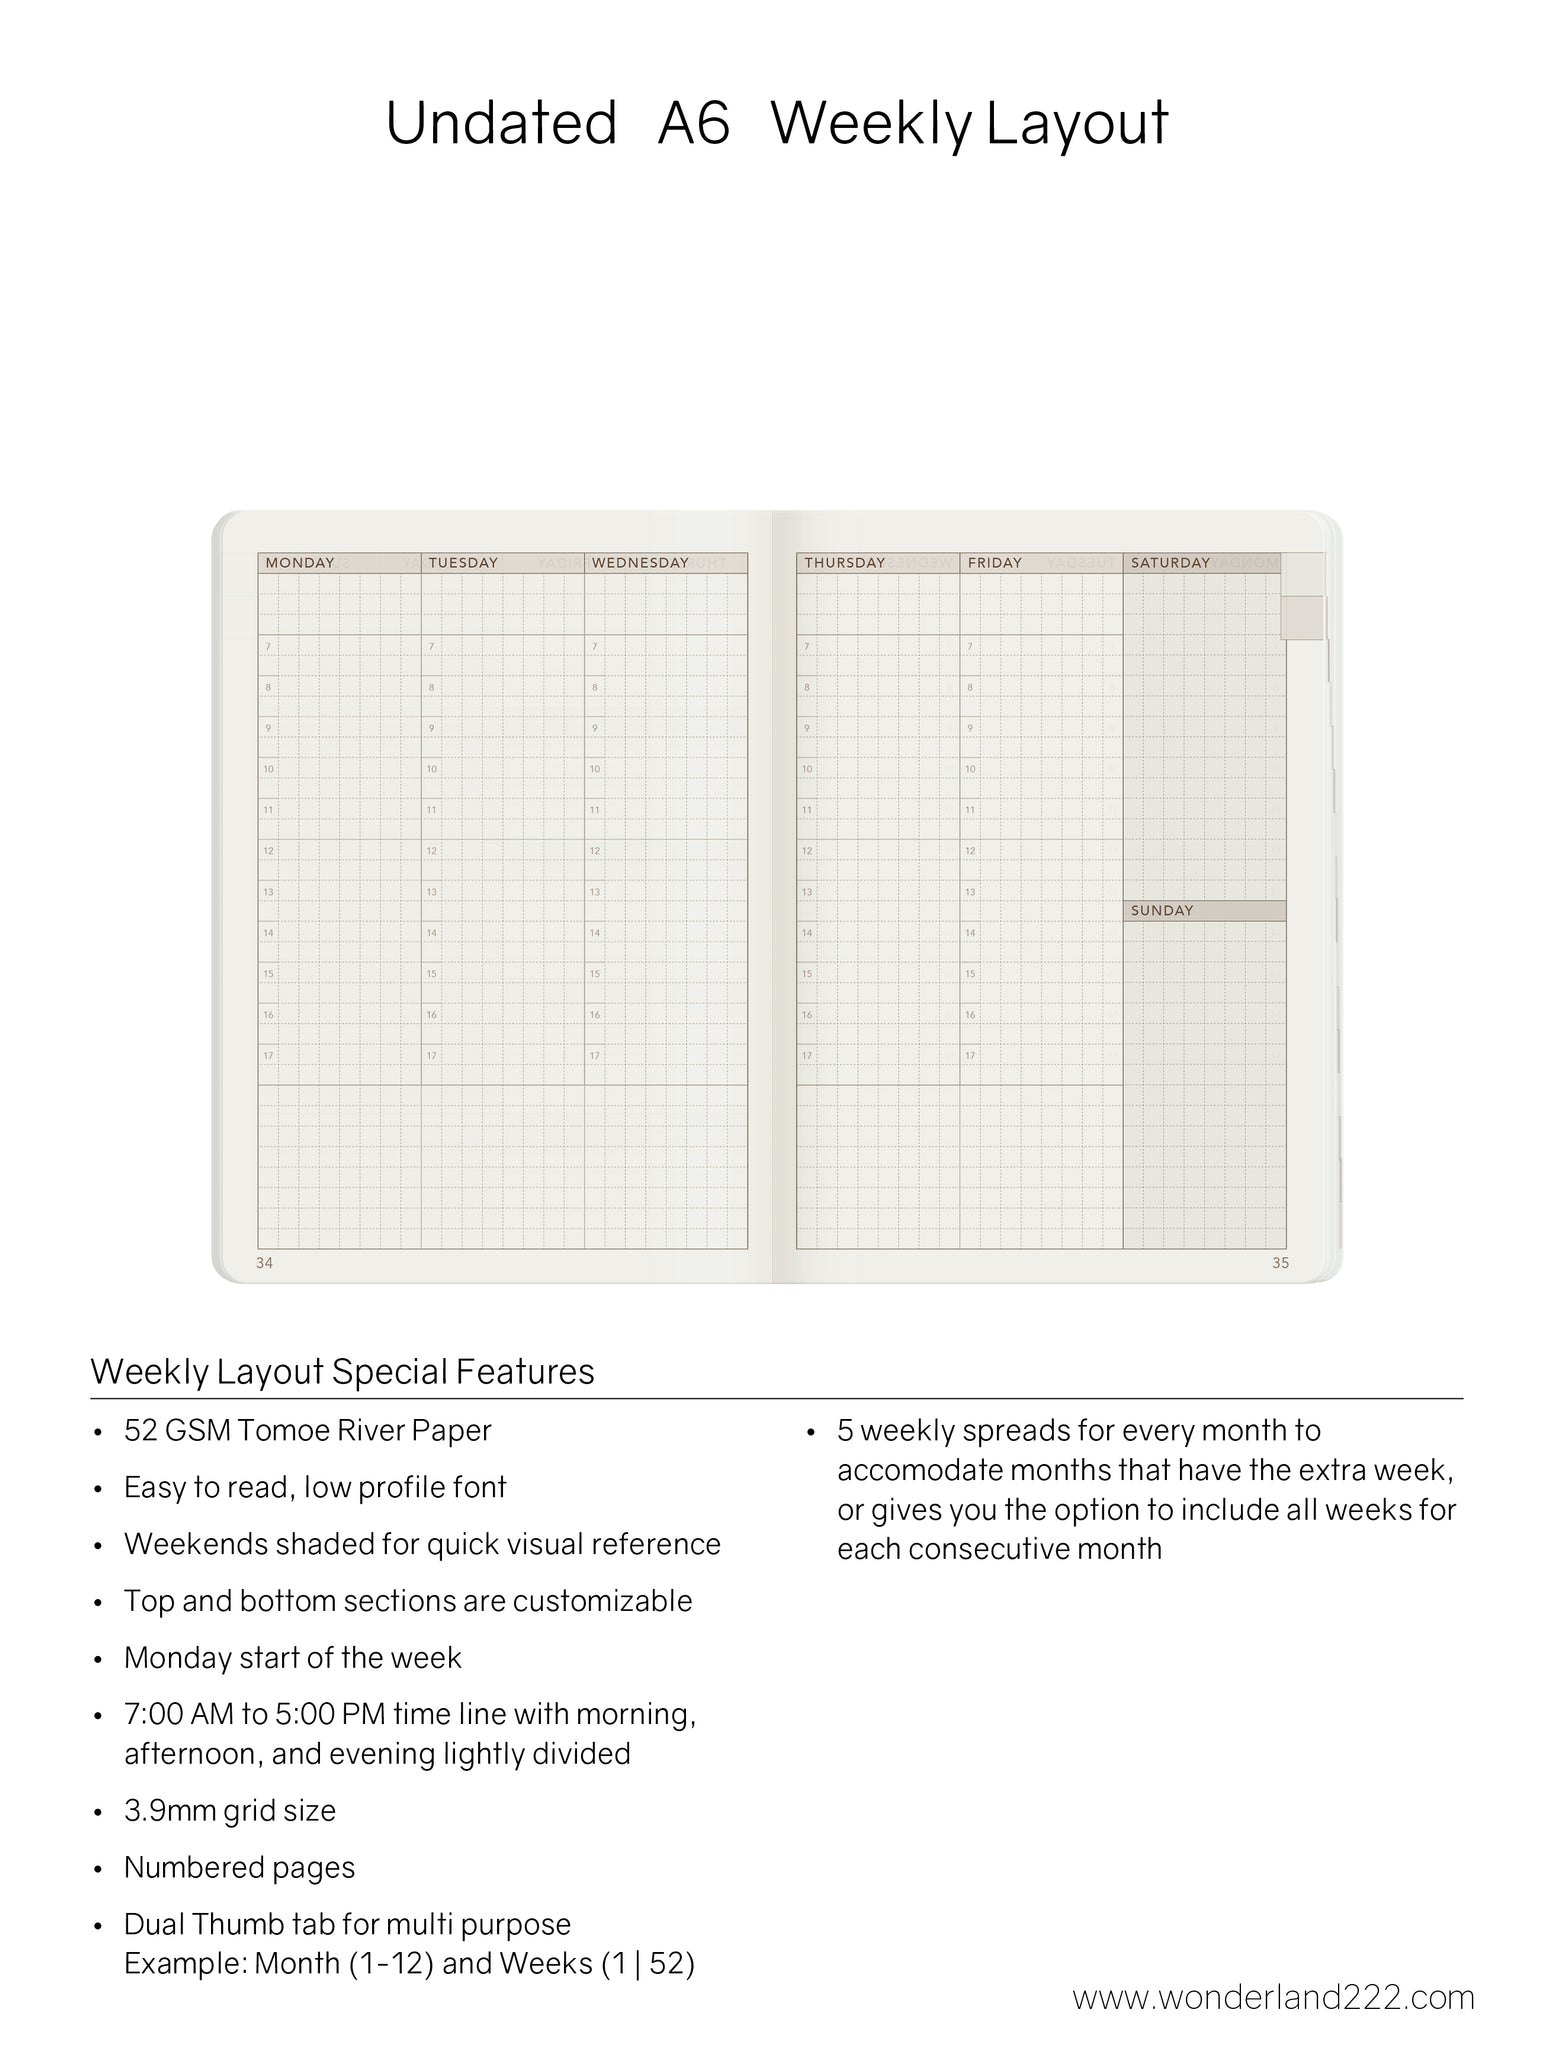 xingtingyu Undated Pocket Weekly Planner Schedule Organizer Agenda Year  Month Week Plan A6 Notebook (A6 undated Planner Gray),Small